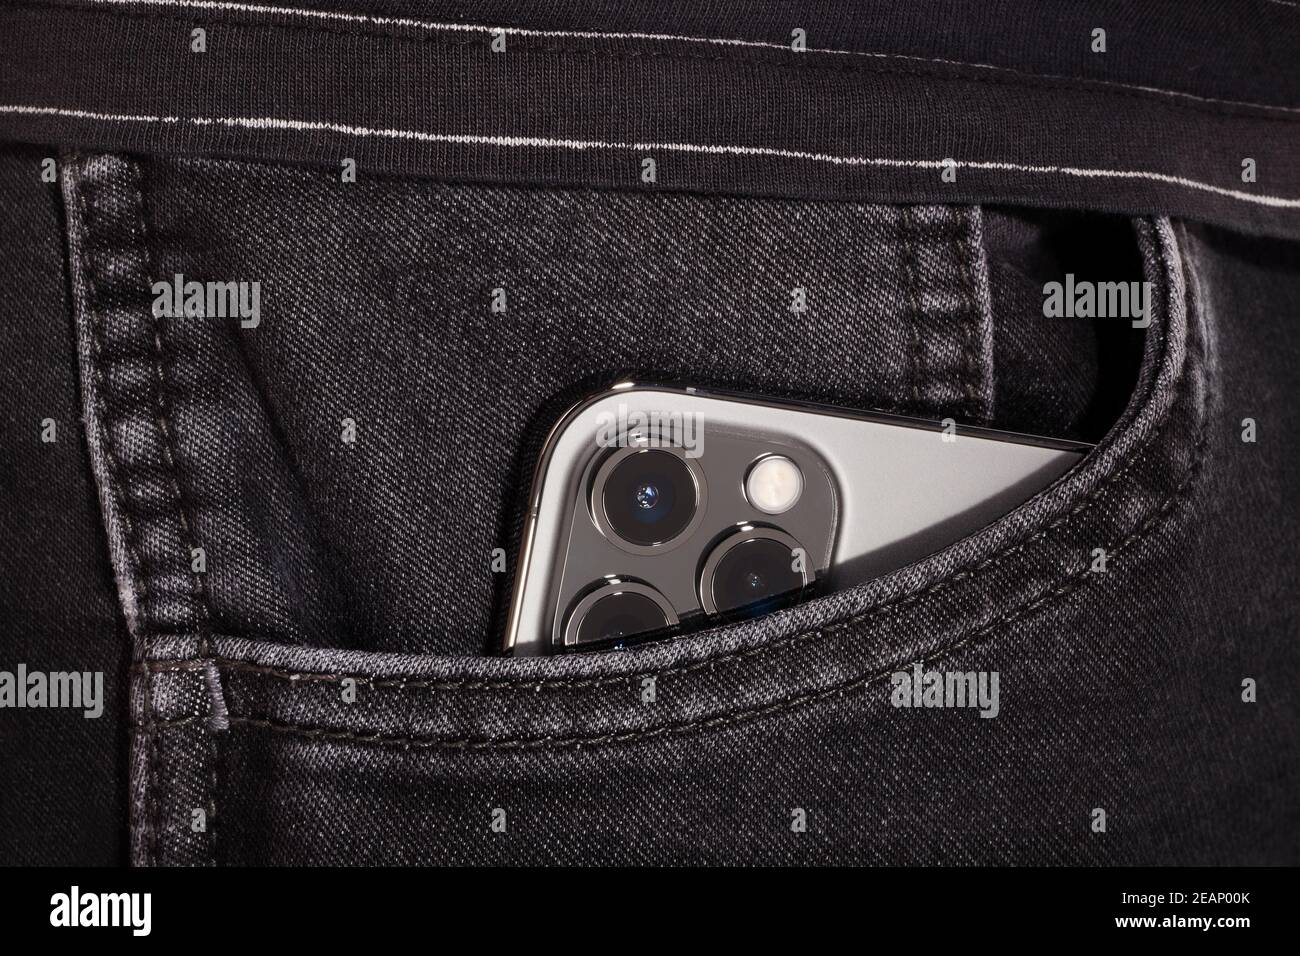 iPhone 12 Pro Max Graphite in pocket. Stock Photo